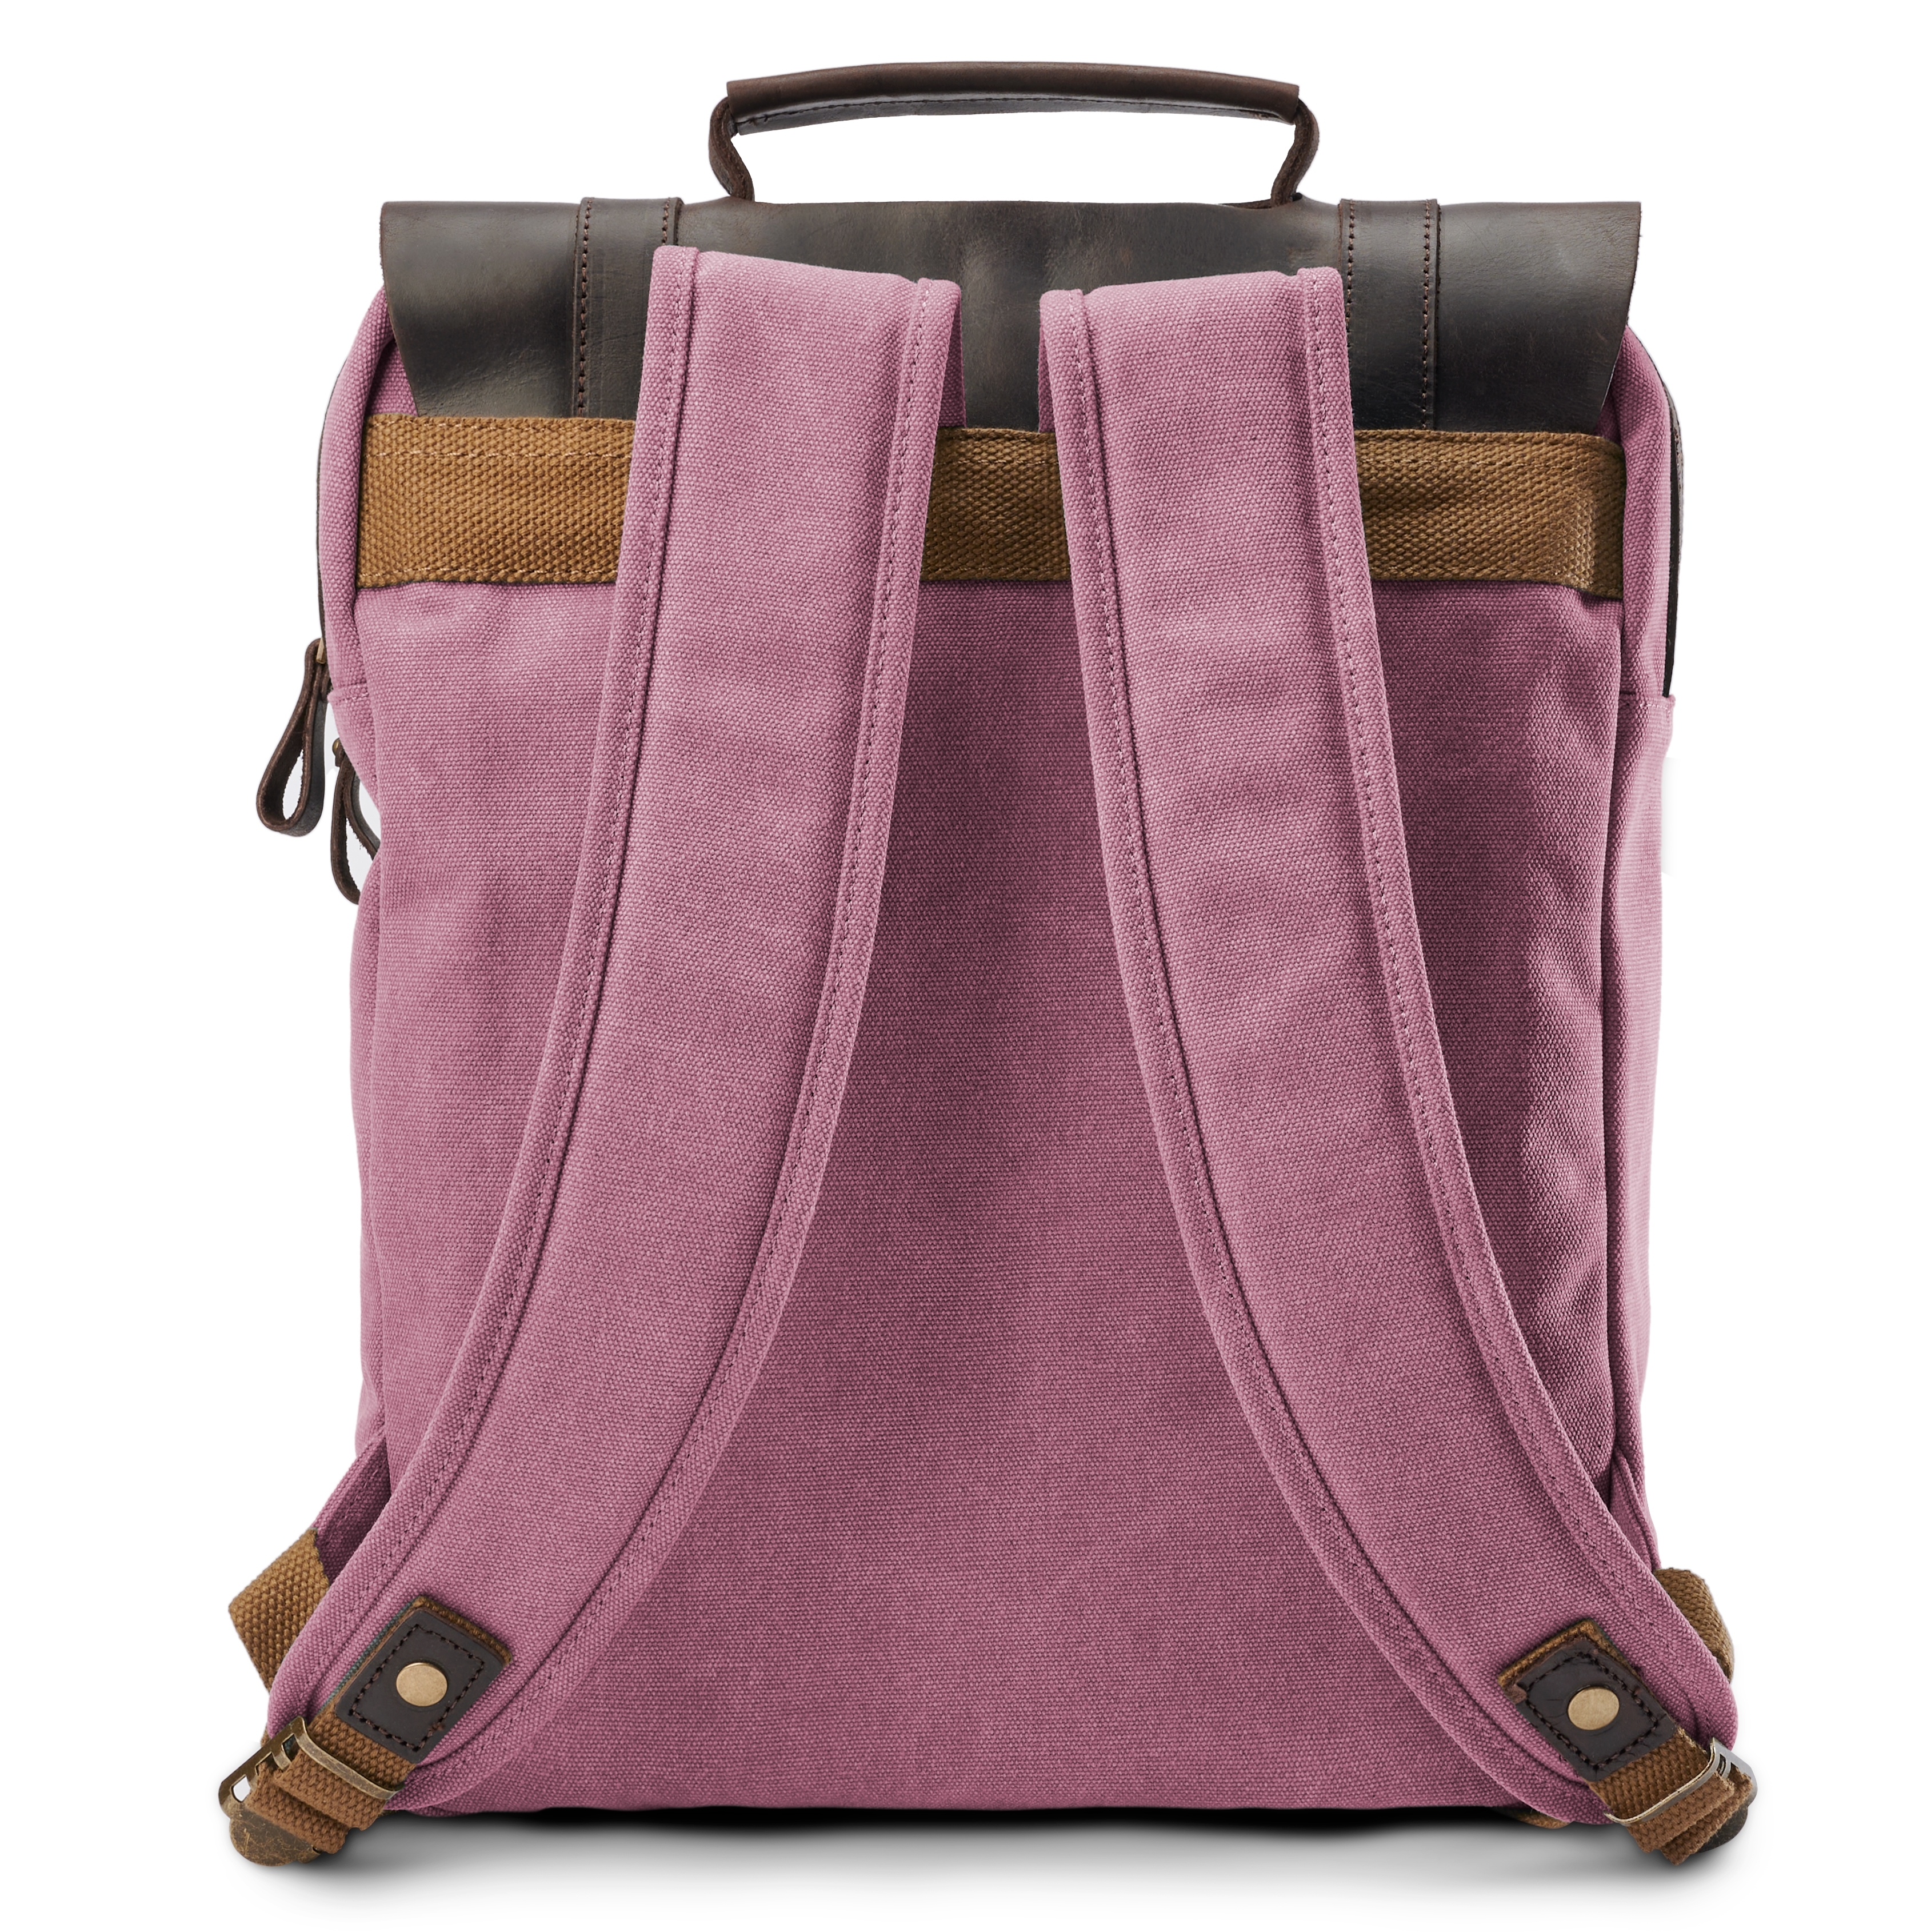 Vintage-Style Pink Canvas & Dark Leather Backpack